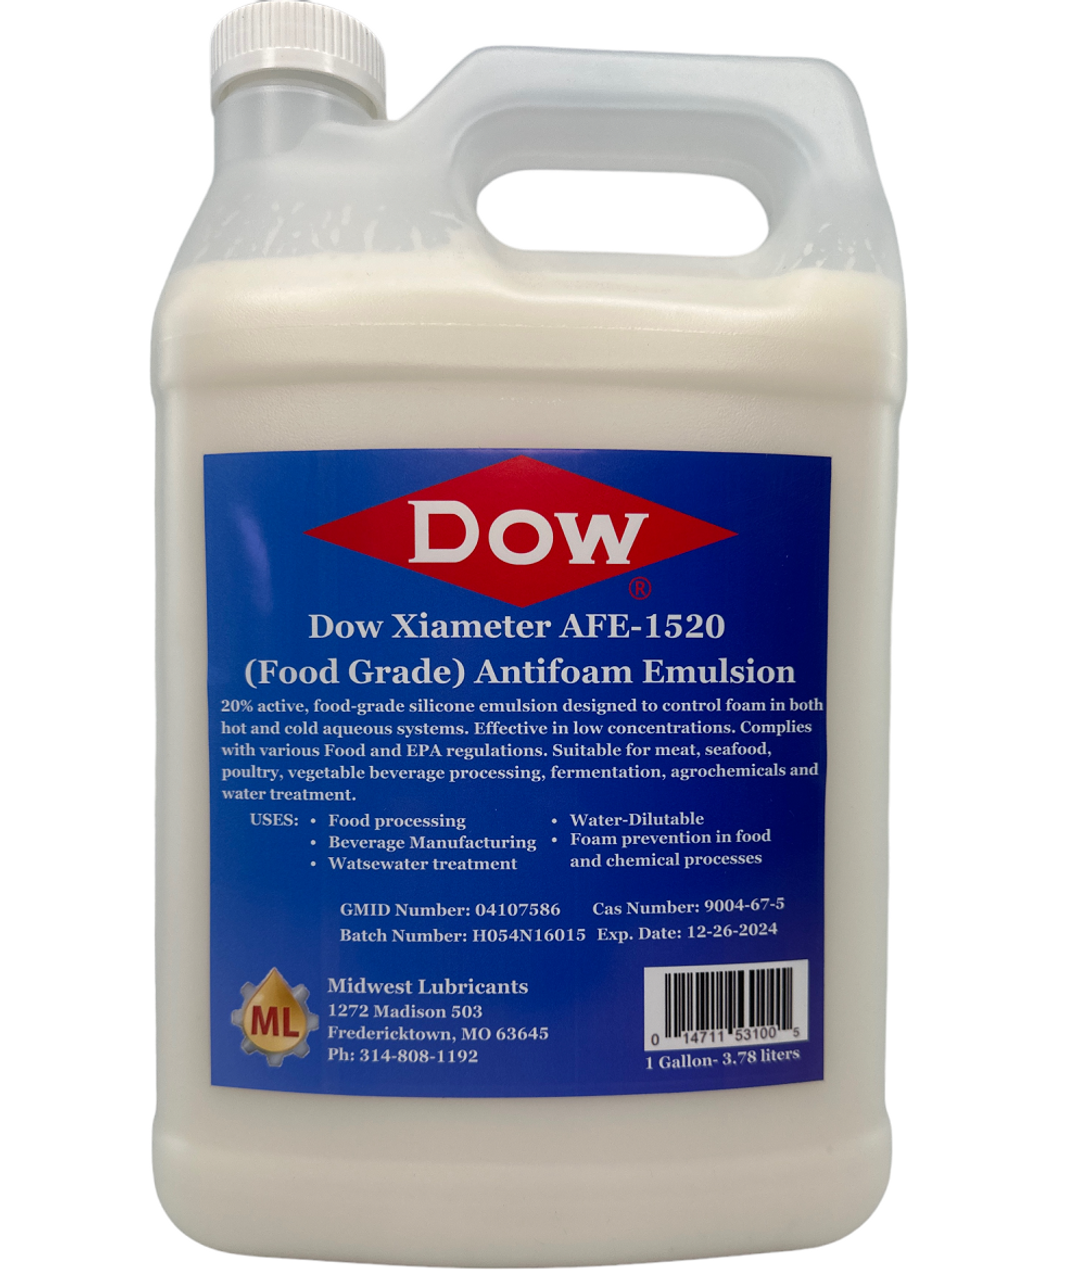 Xiameter AFE-1520 Antifoam Emulsion, Dow Xiameter AFE-1510 Antifoam